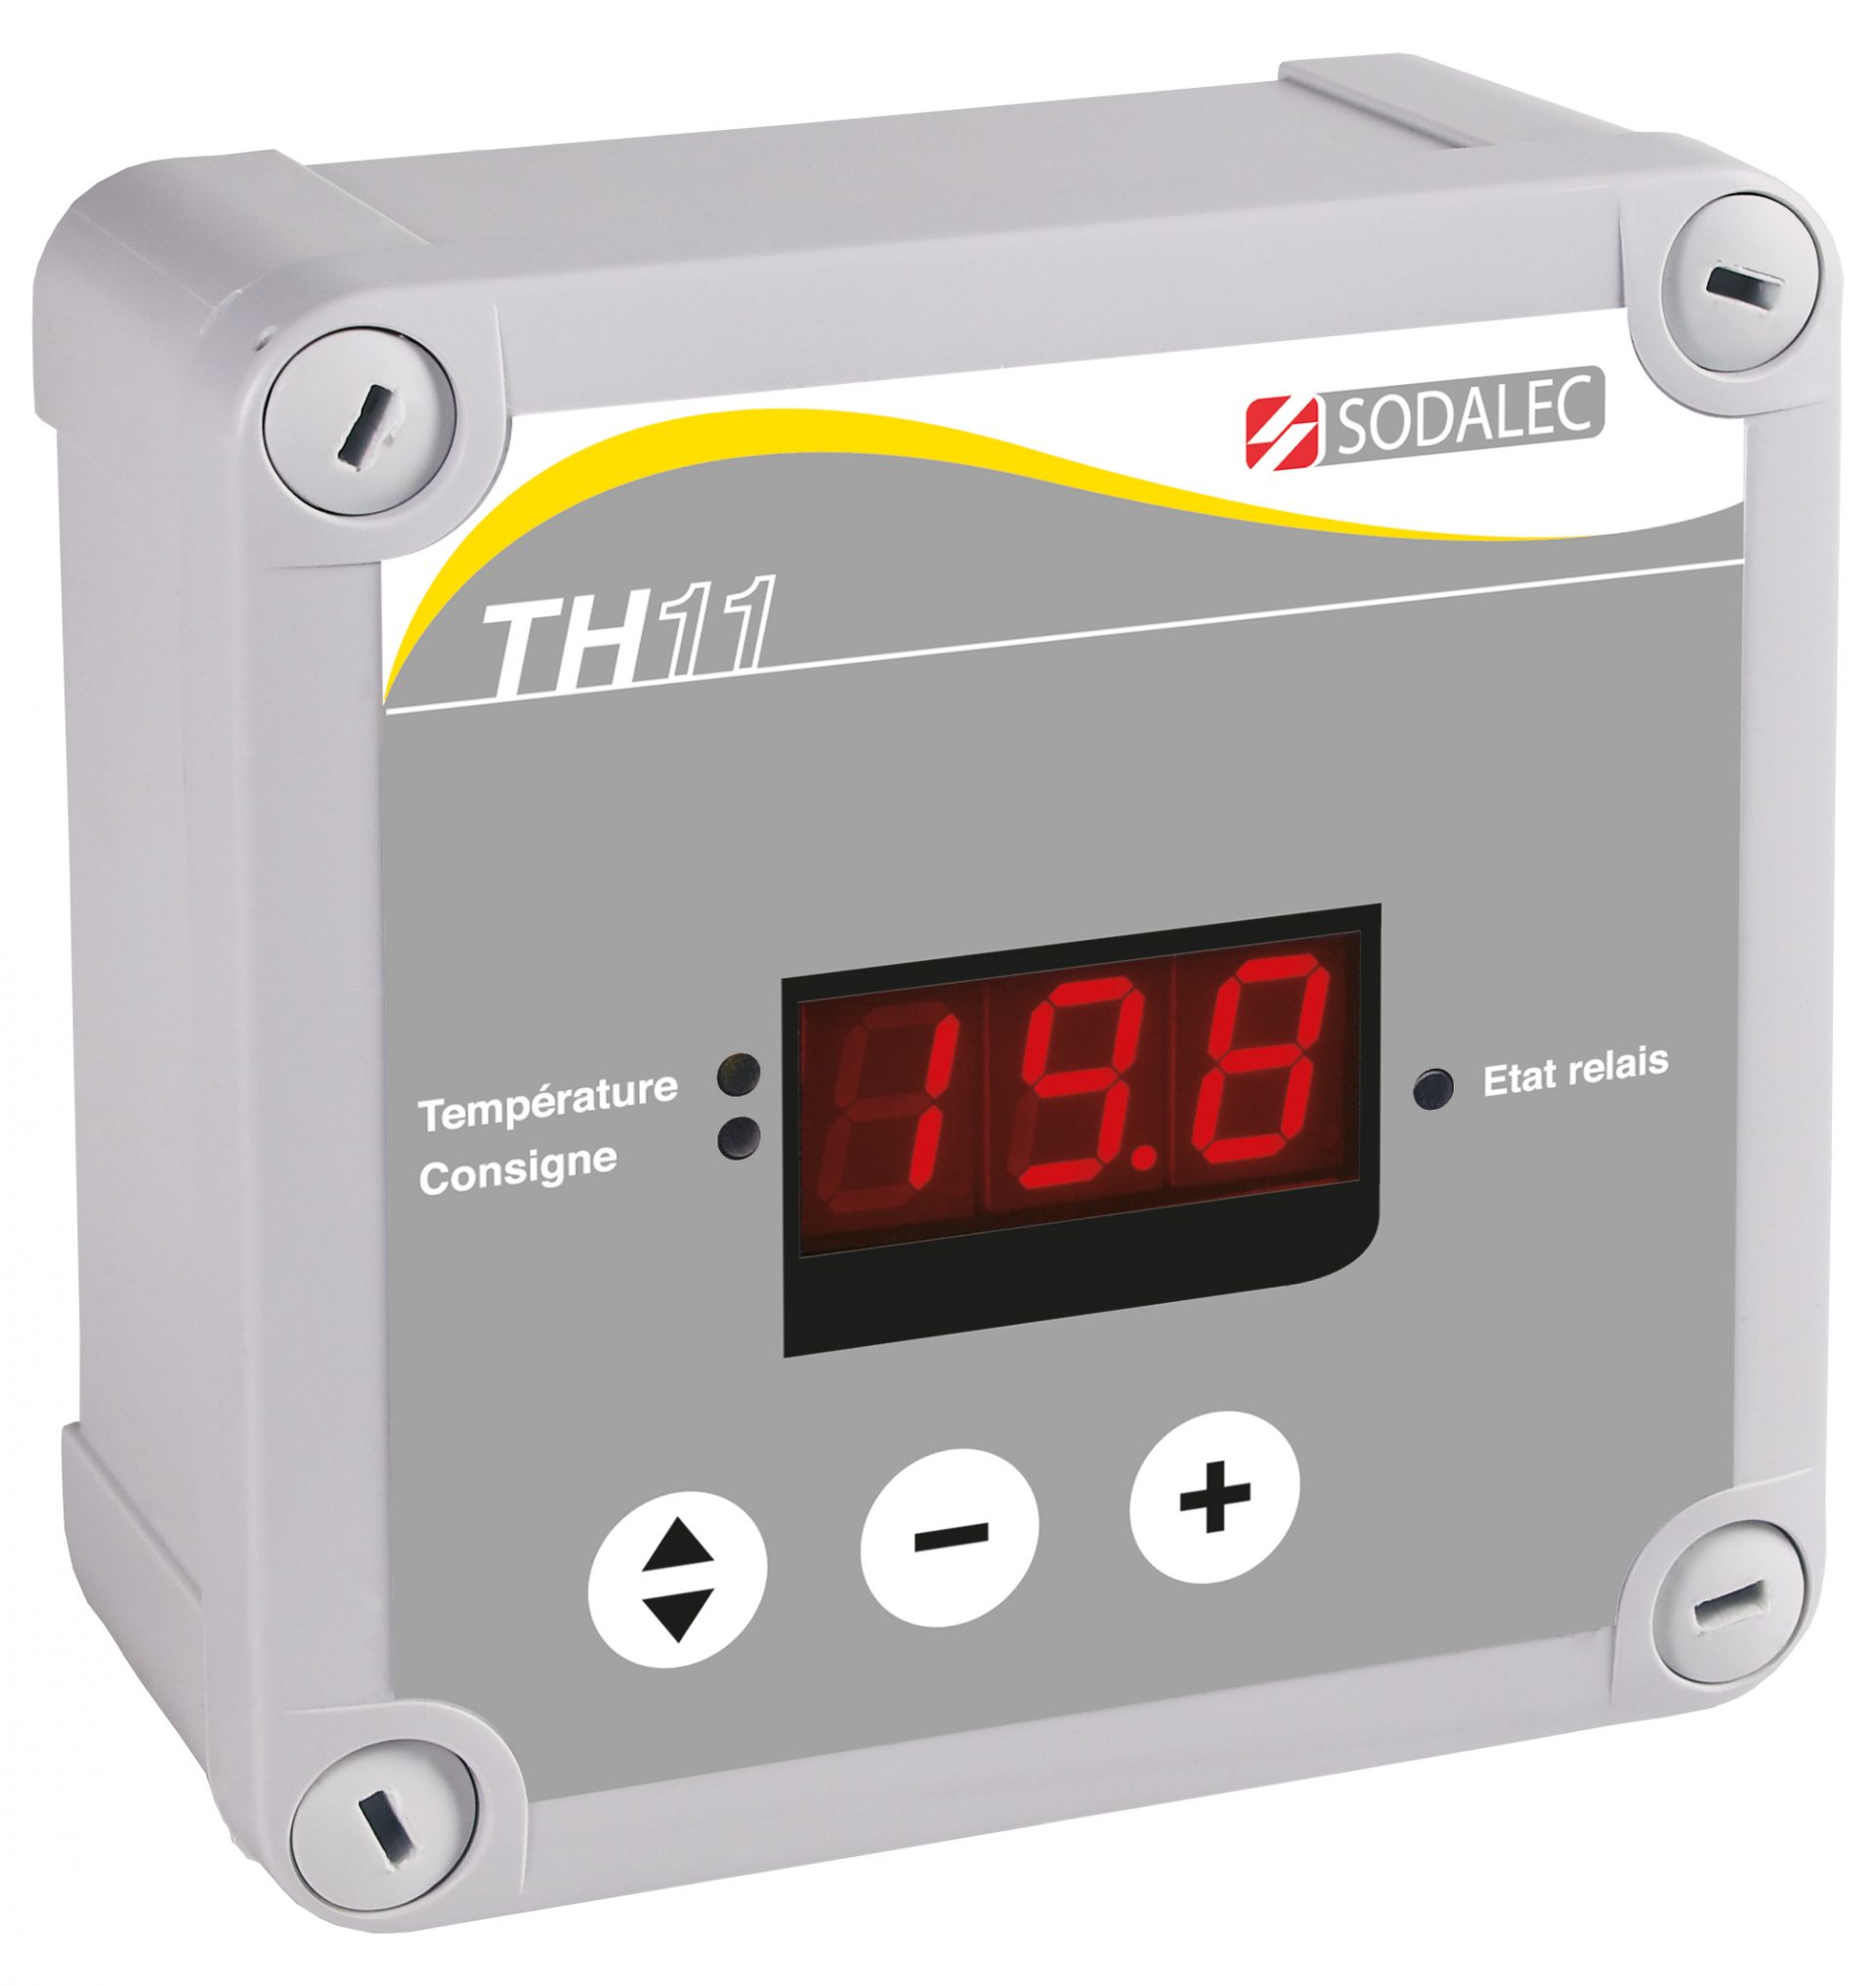 TH11 thermostat